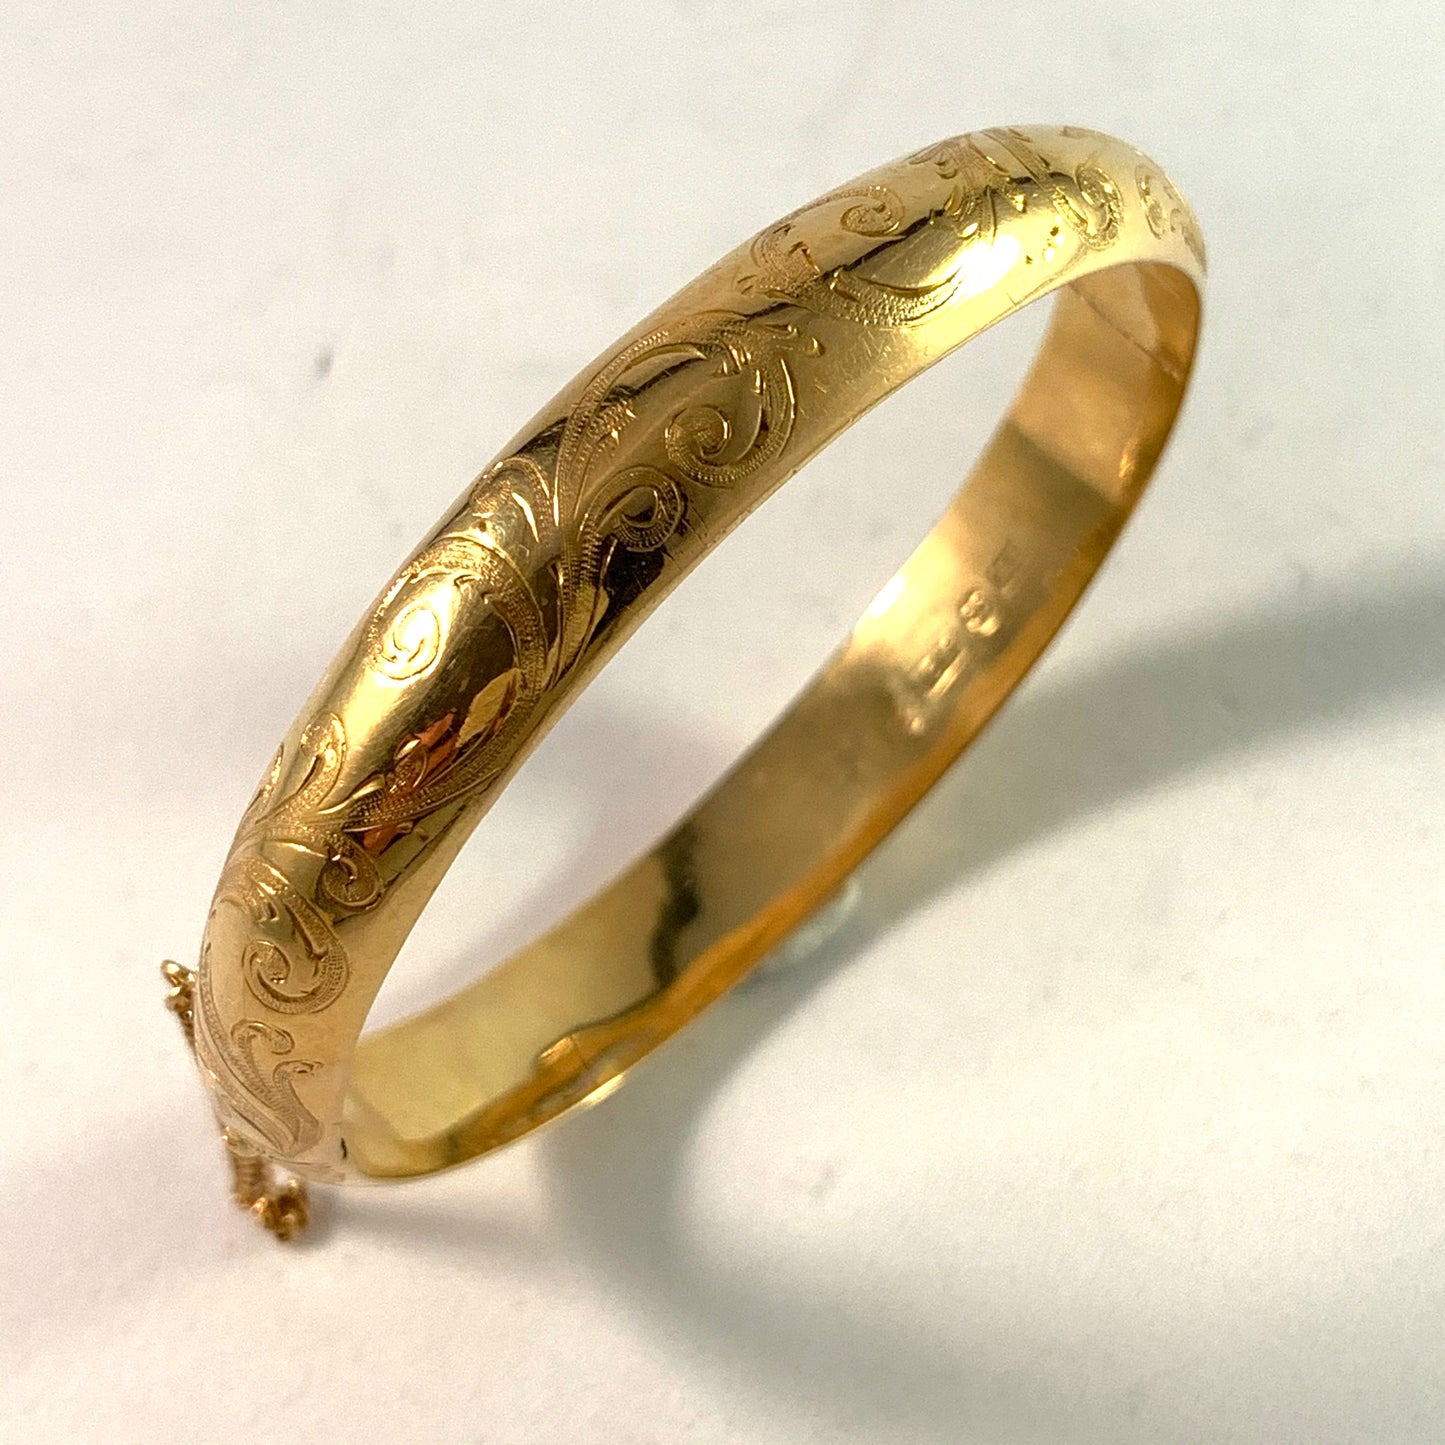 Carl Neuendorf, Sweden 1873, Victorian 18k Gold Bangle Bracelet.